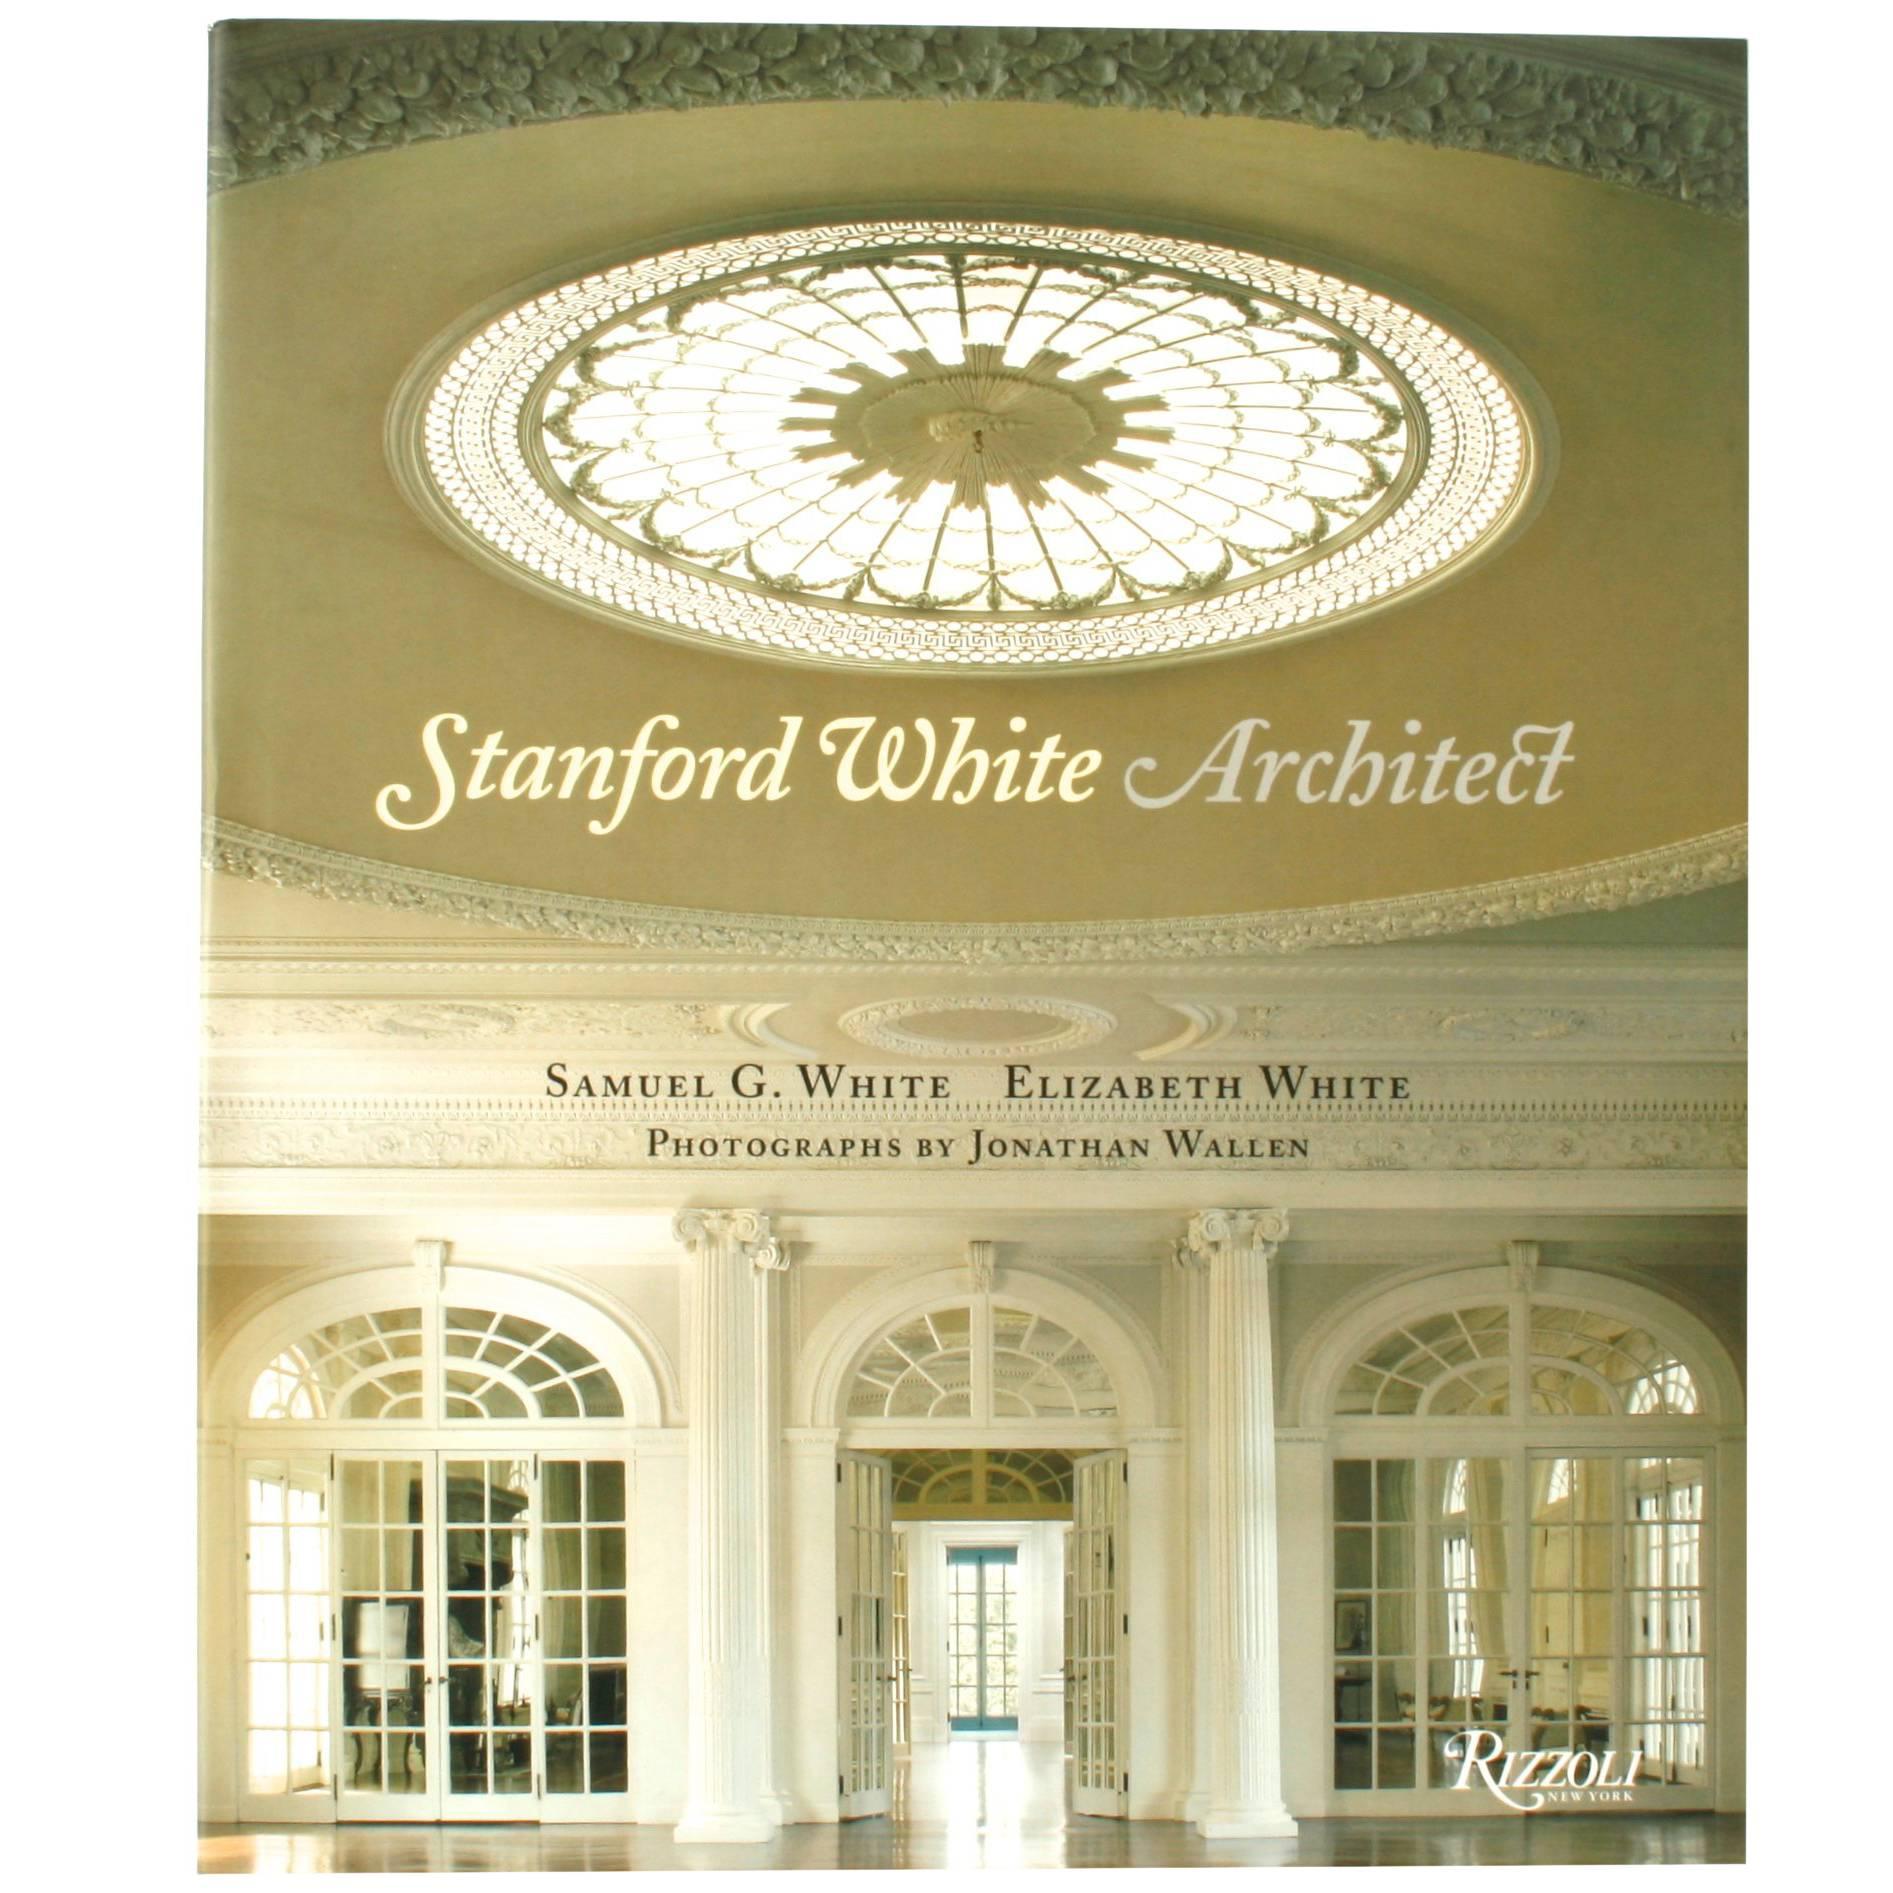 Stanford White Architect by Samuel G. White and Elizabeth White